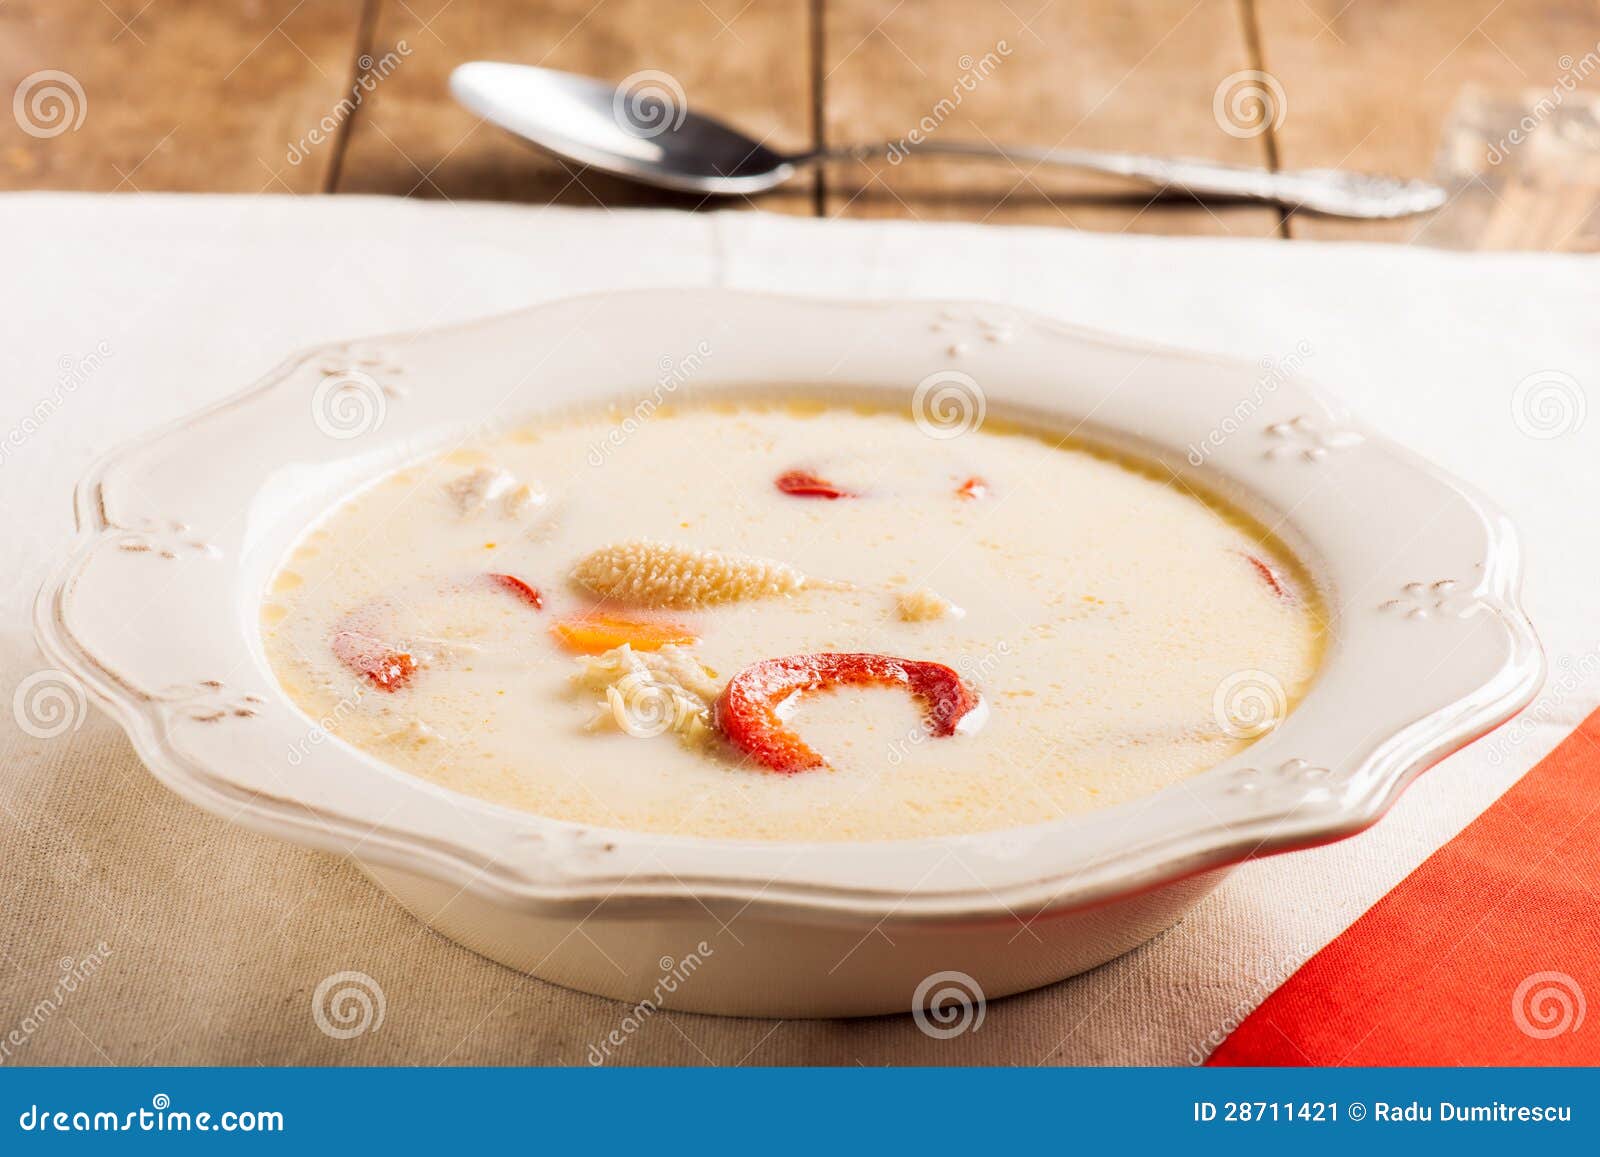 Balkan tripe soup stock image. Image of horizontal, offal - 28711421